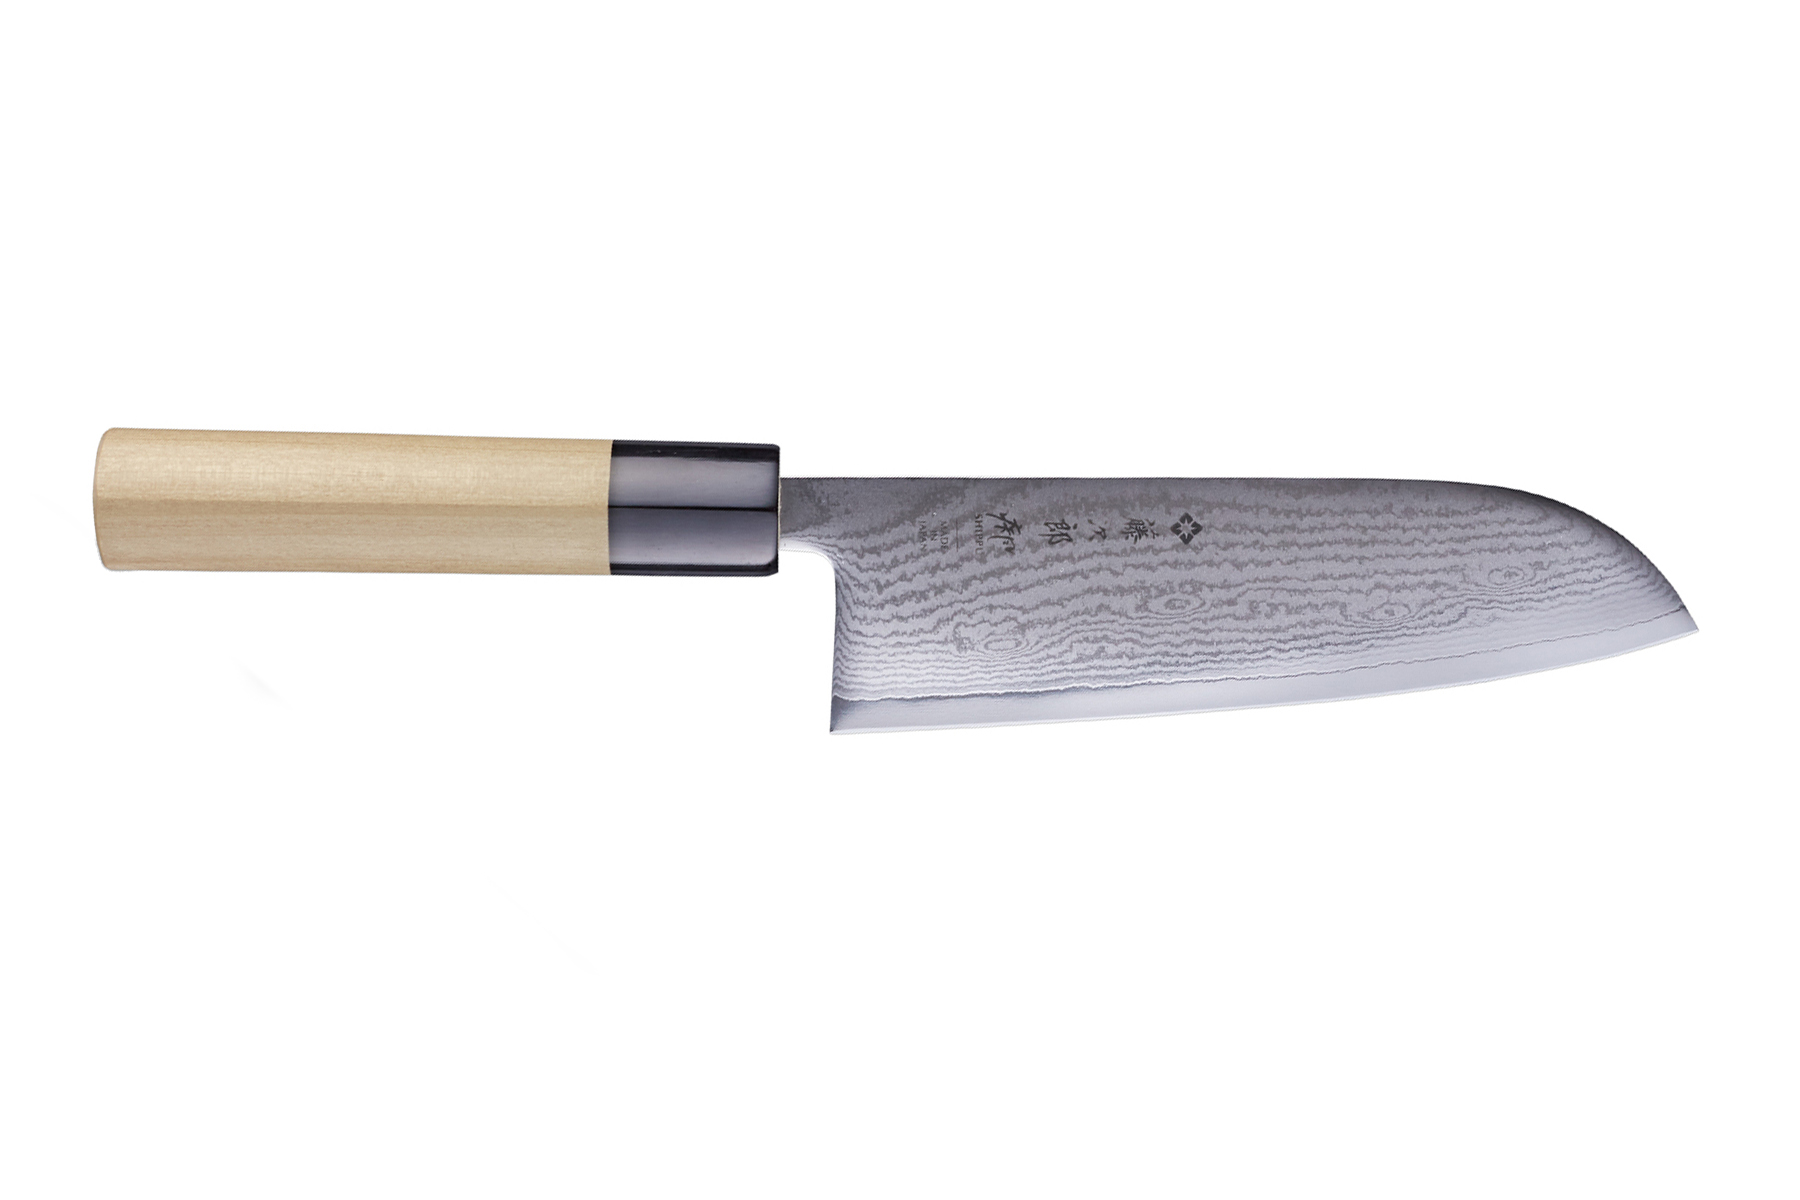 Couteau japonais Tojiro Shippu damas - Couteau santoku 16,5 cm